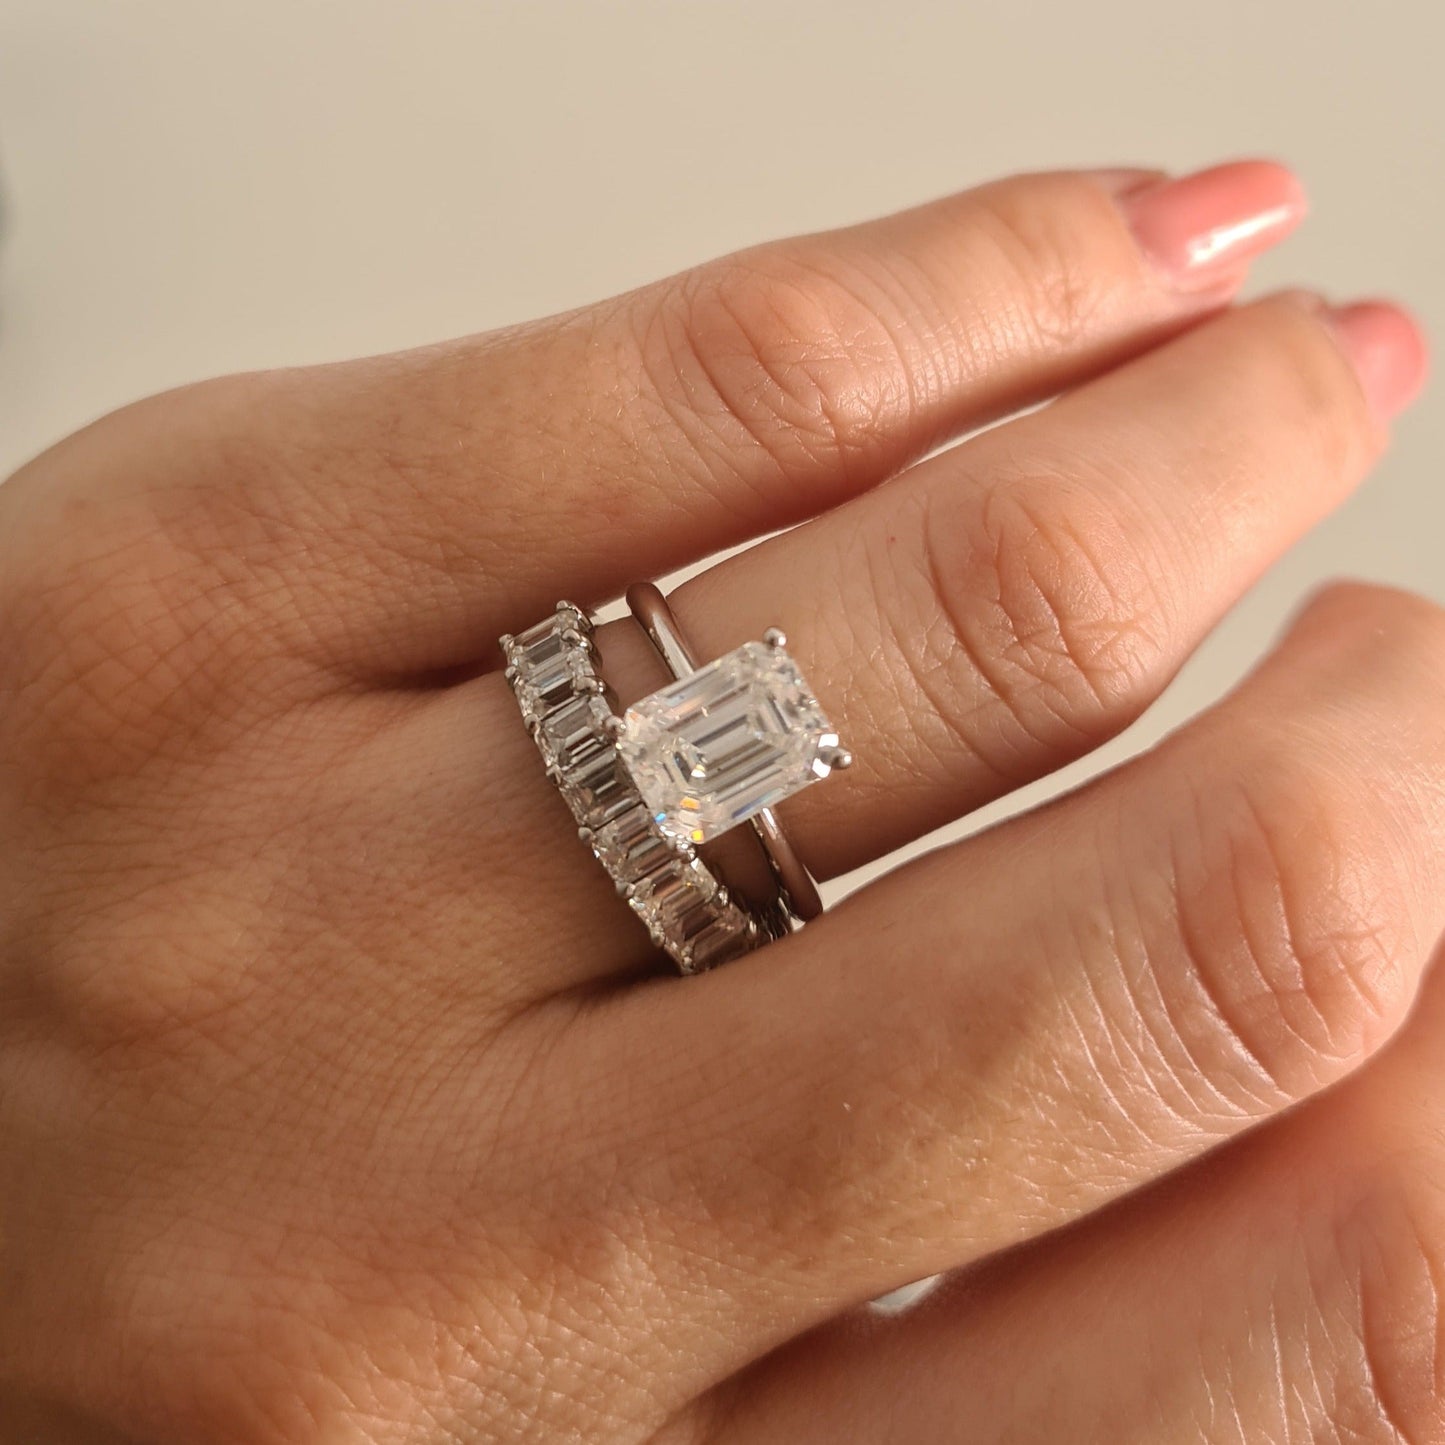 Ursa emerald cut moissanite engagement ring next to an eternity wedding band